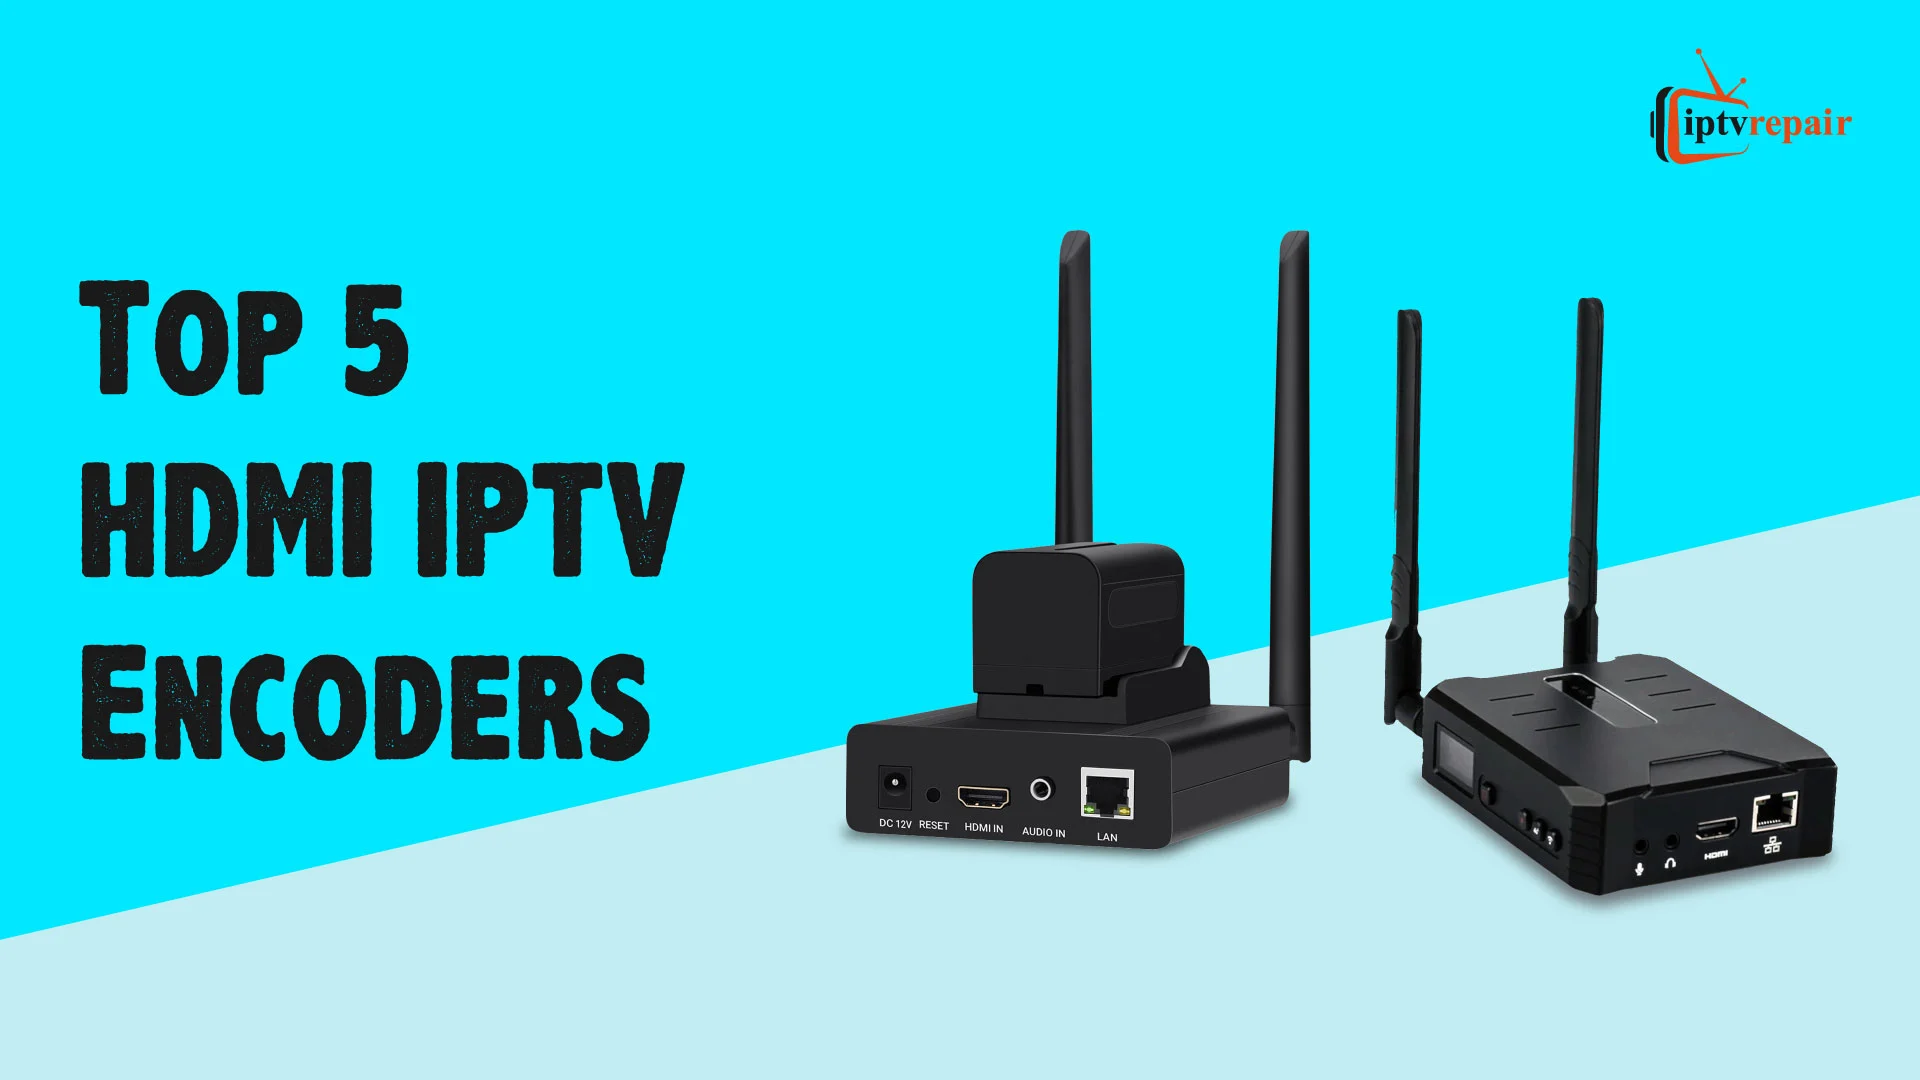 HDMI IPTV Encoders